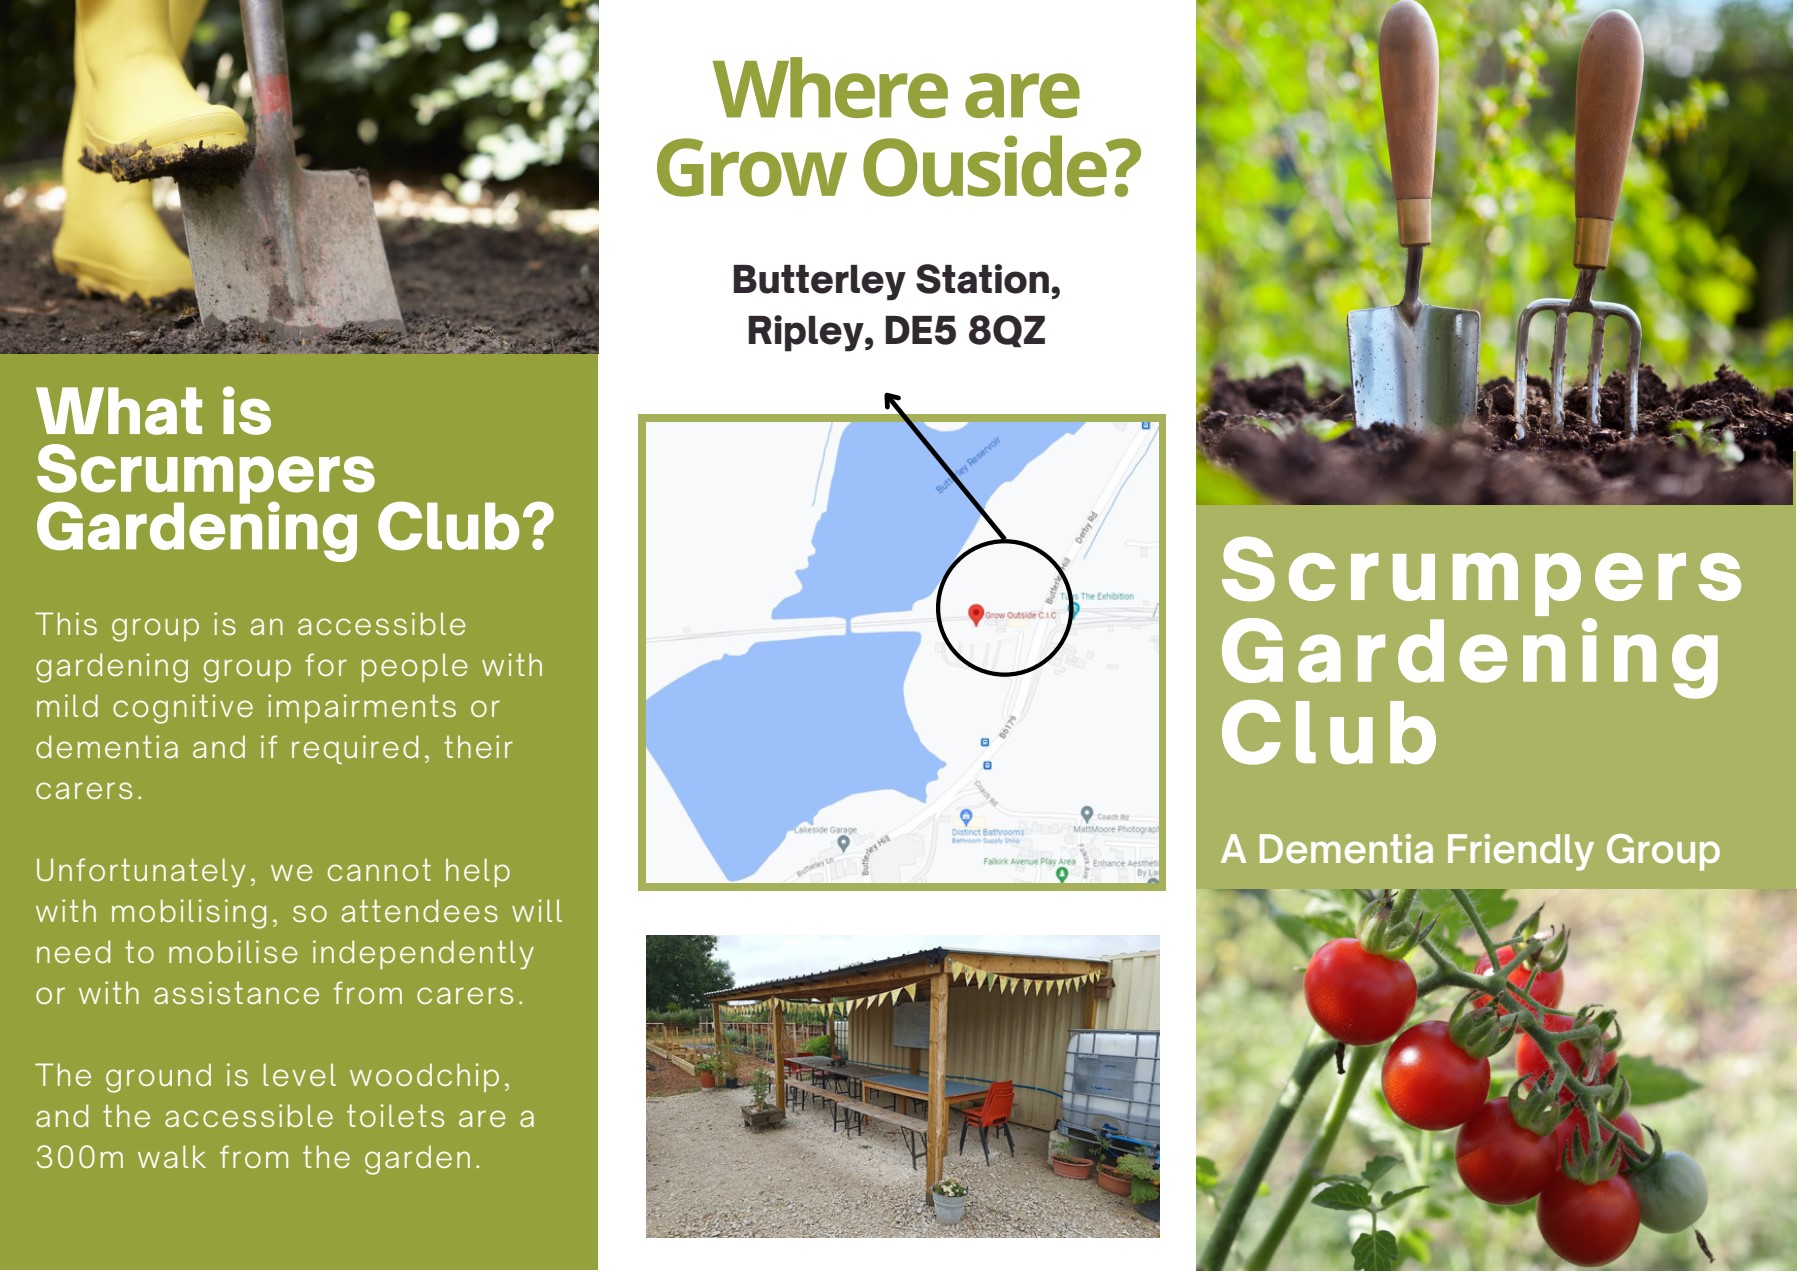 Scrumpers Gardening Club 1.jpg (417 KB)